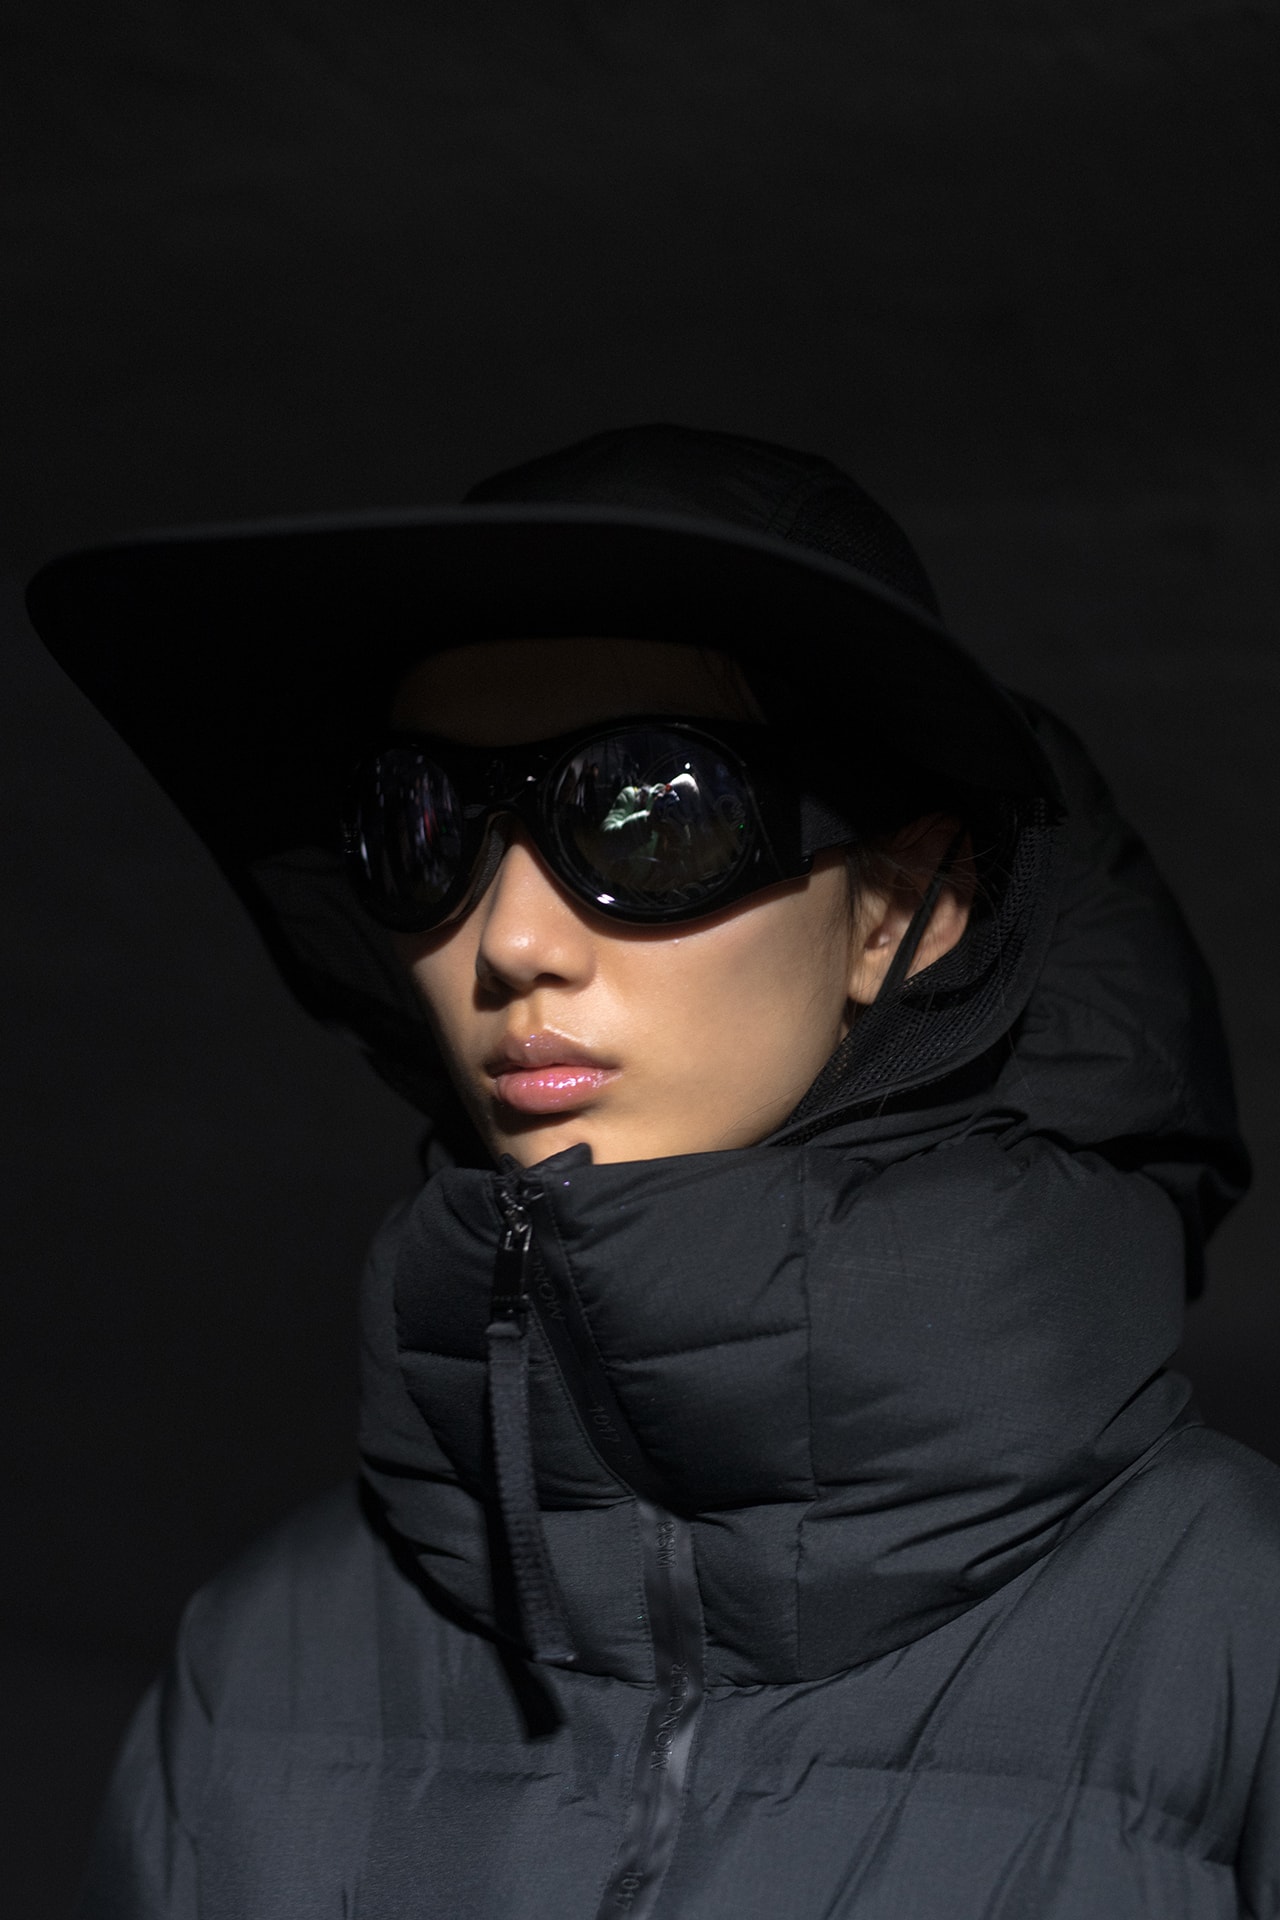 moncler genius milan fashion week presentation alyx matthew williams collaboration black sunglasses hat jacket